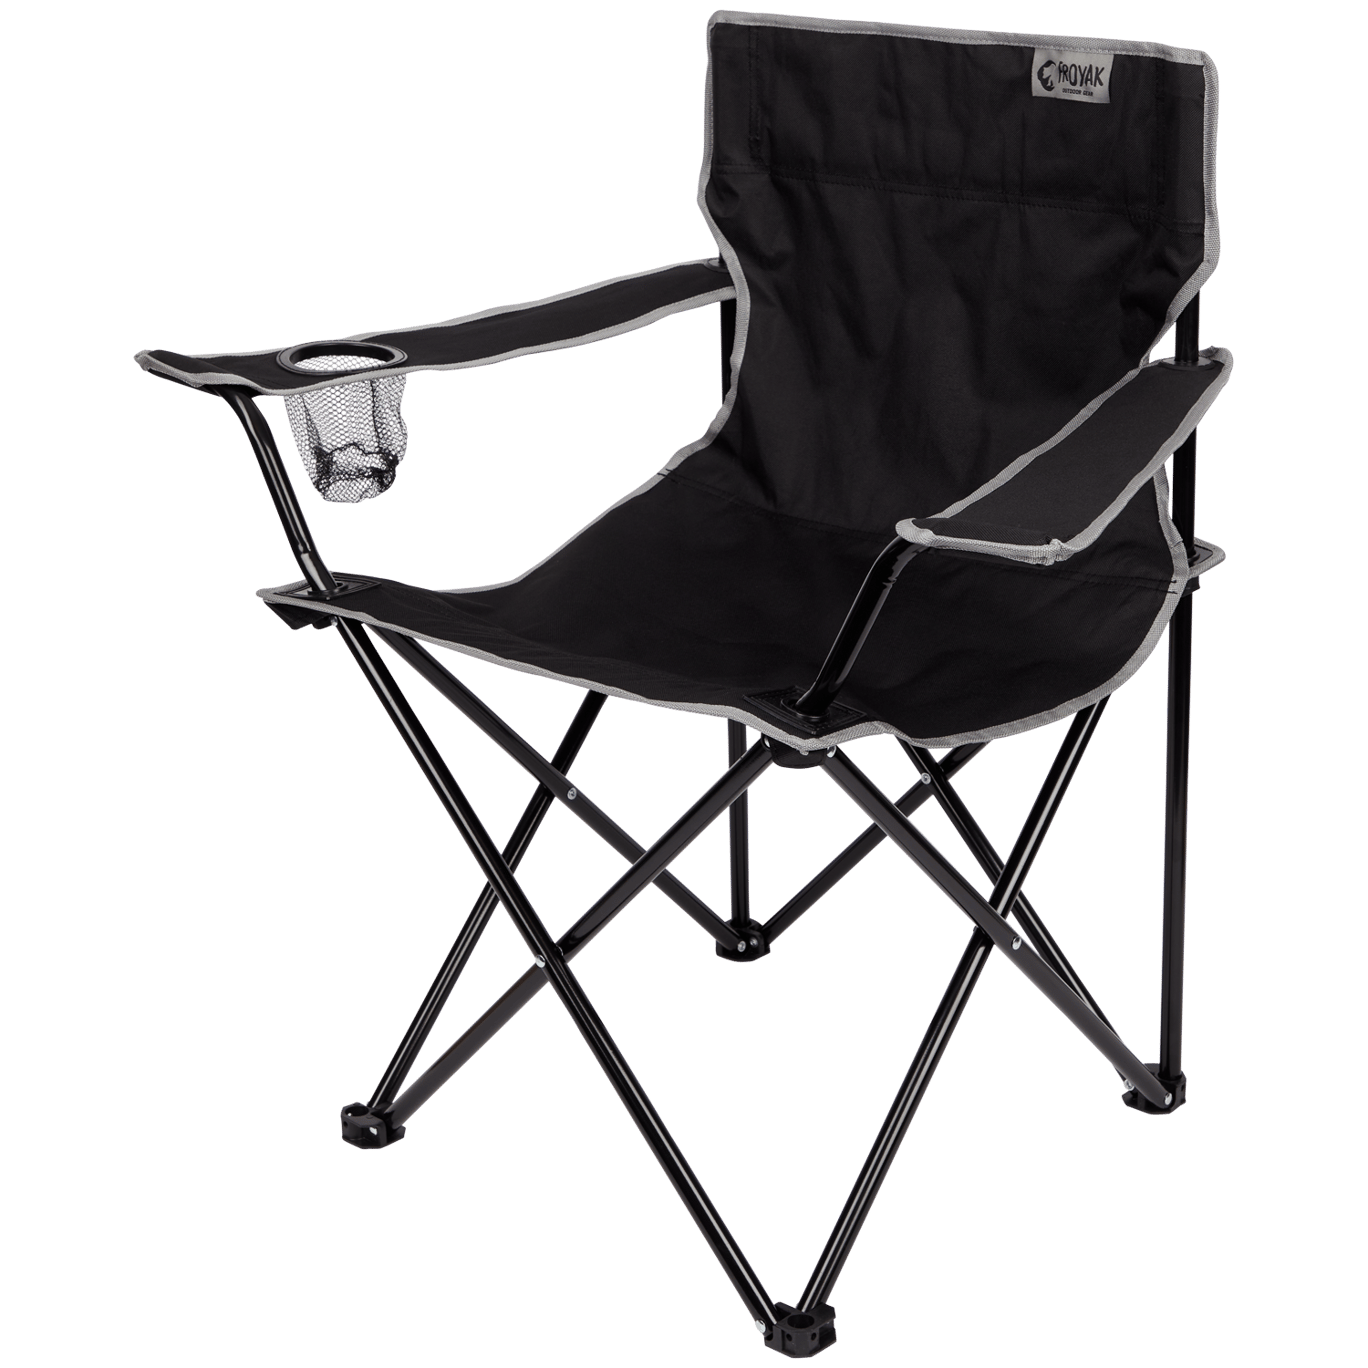 Froyak opvouwbare campingstoel